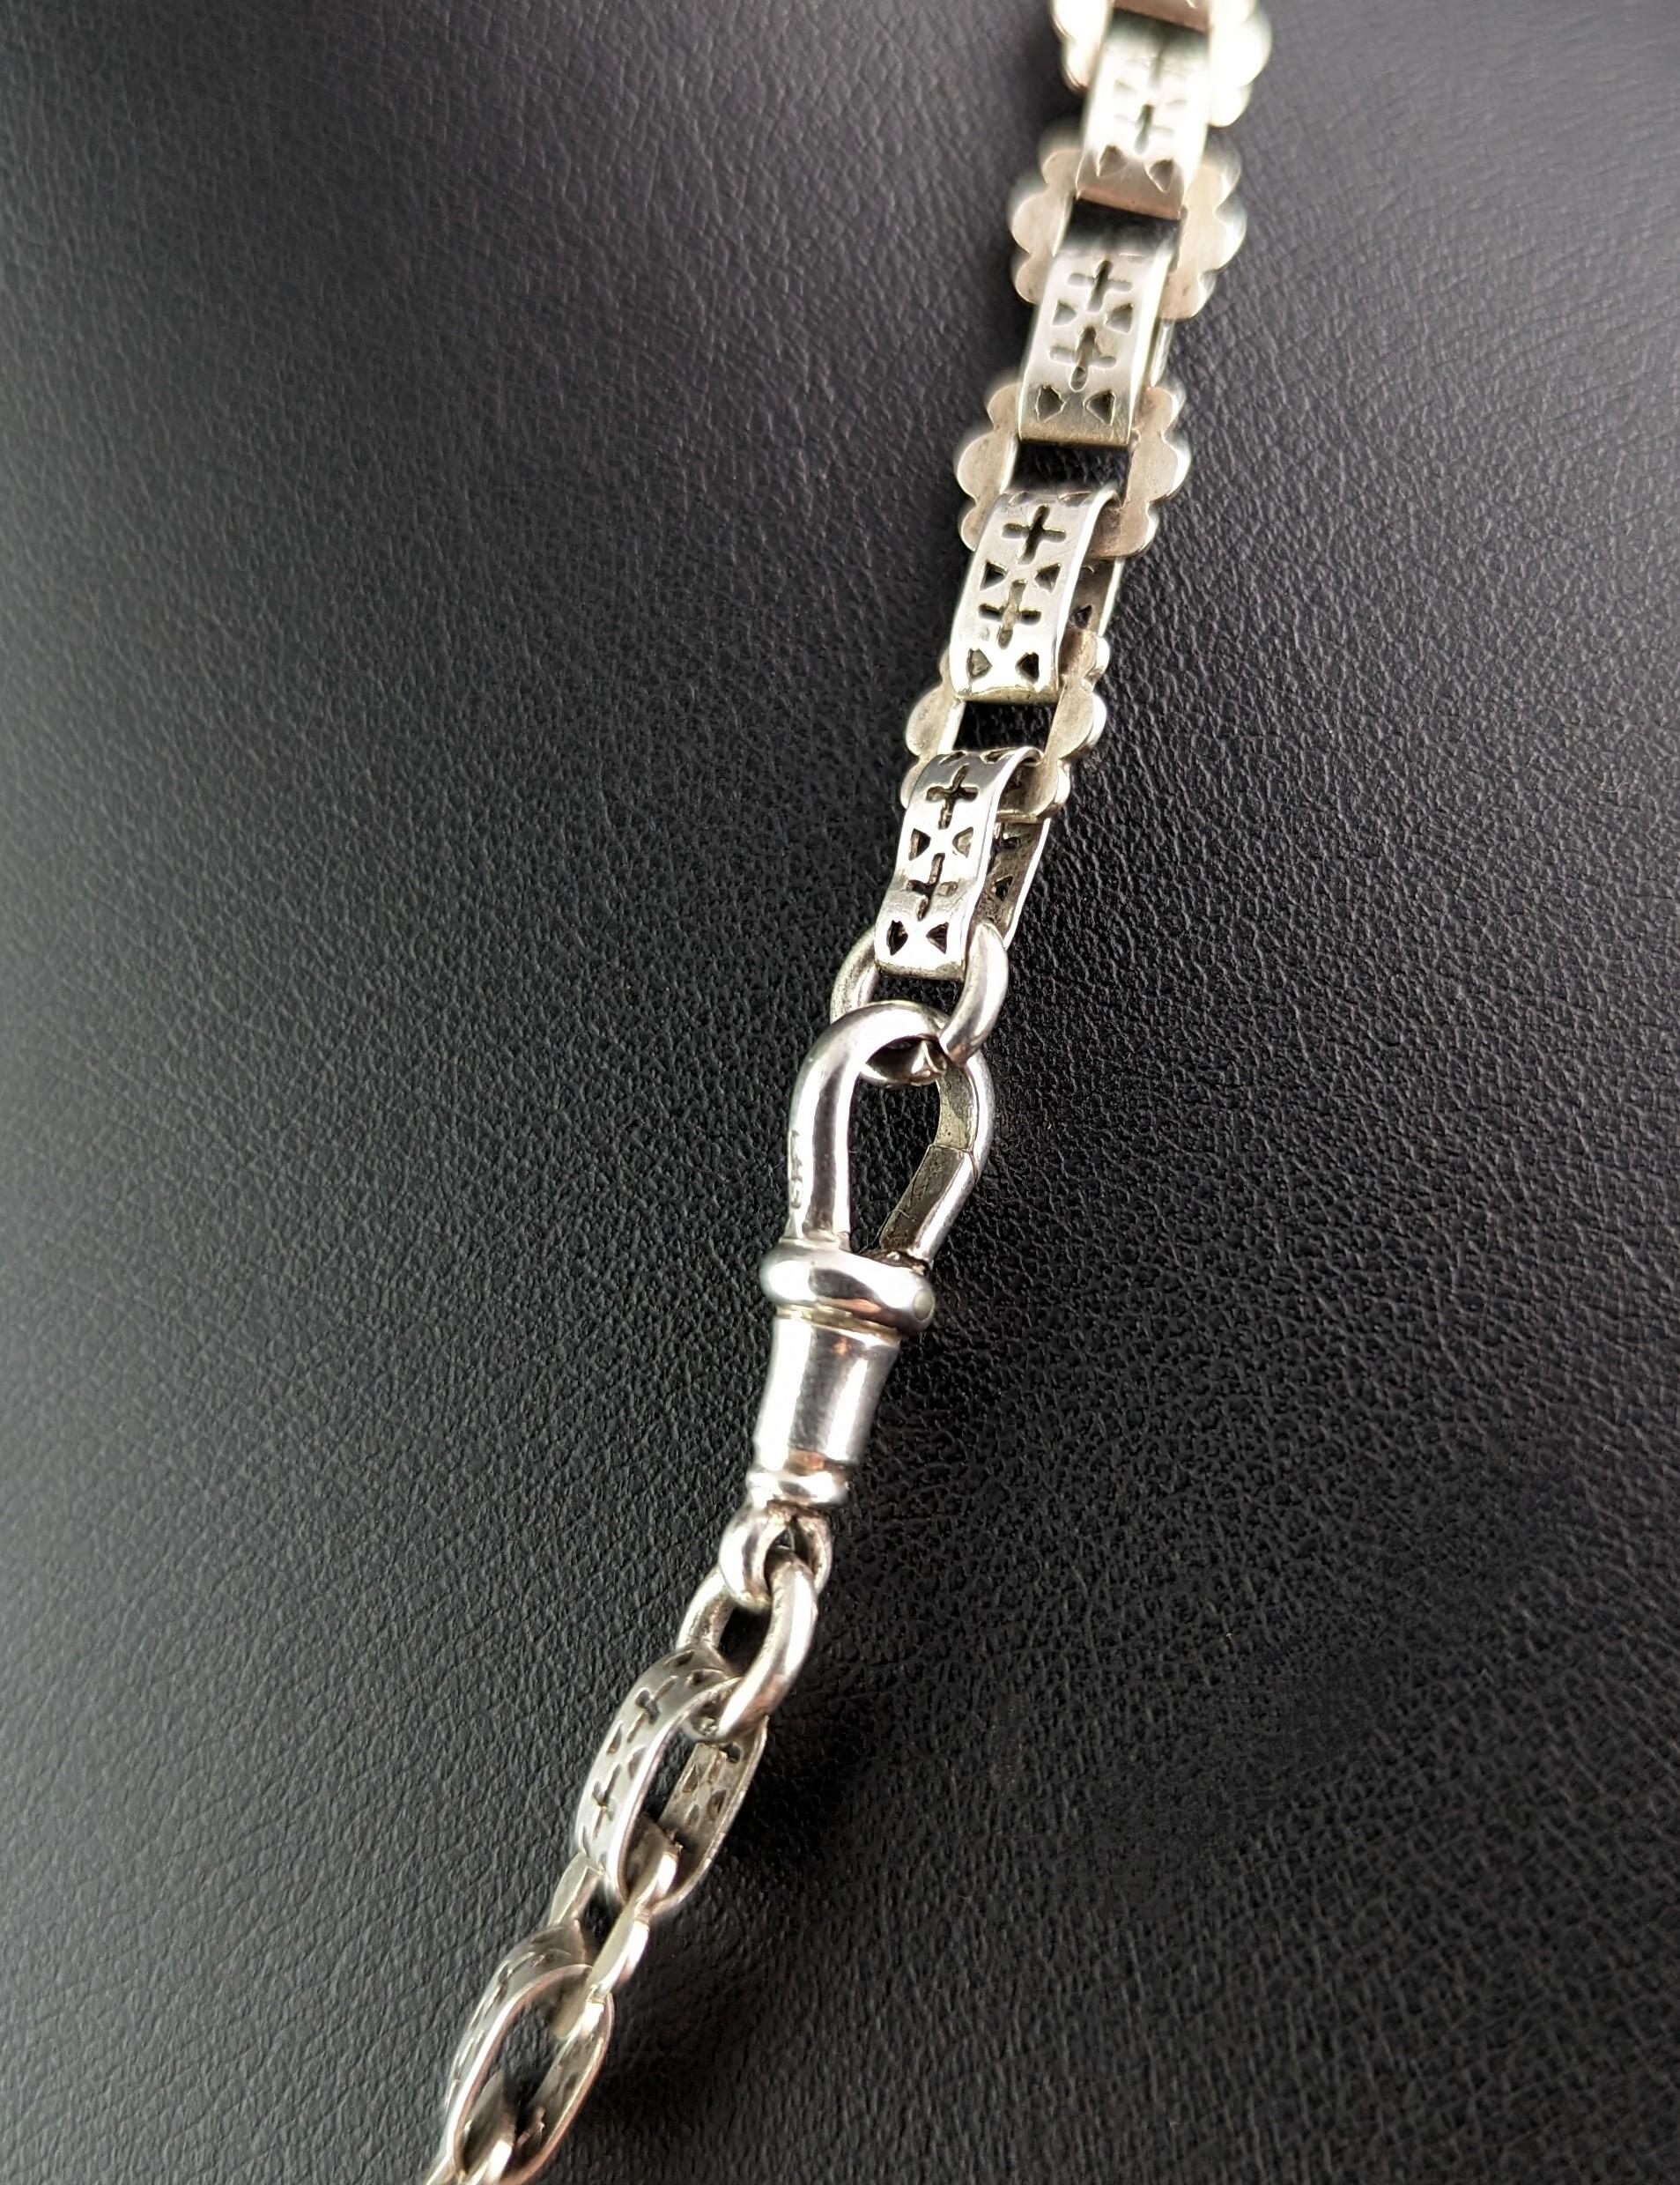 Antique Silver Book Chain Necklace, Victorian Collar 3